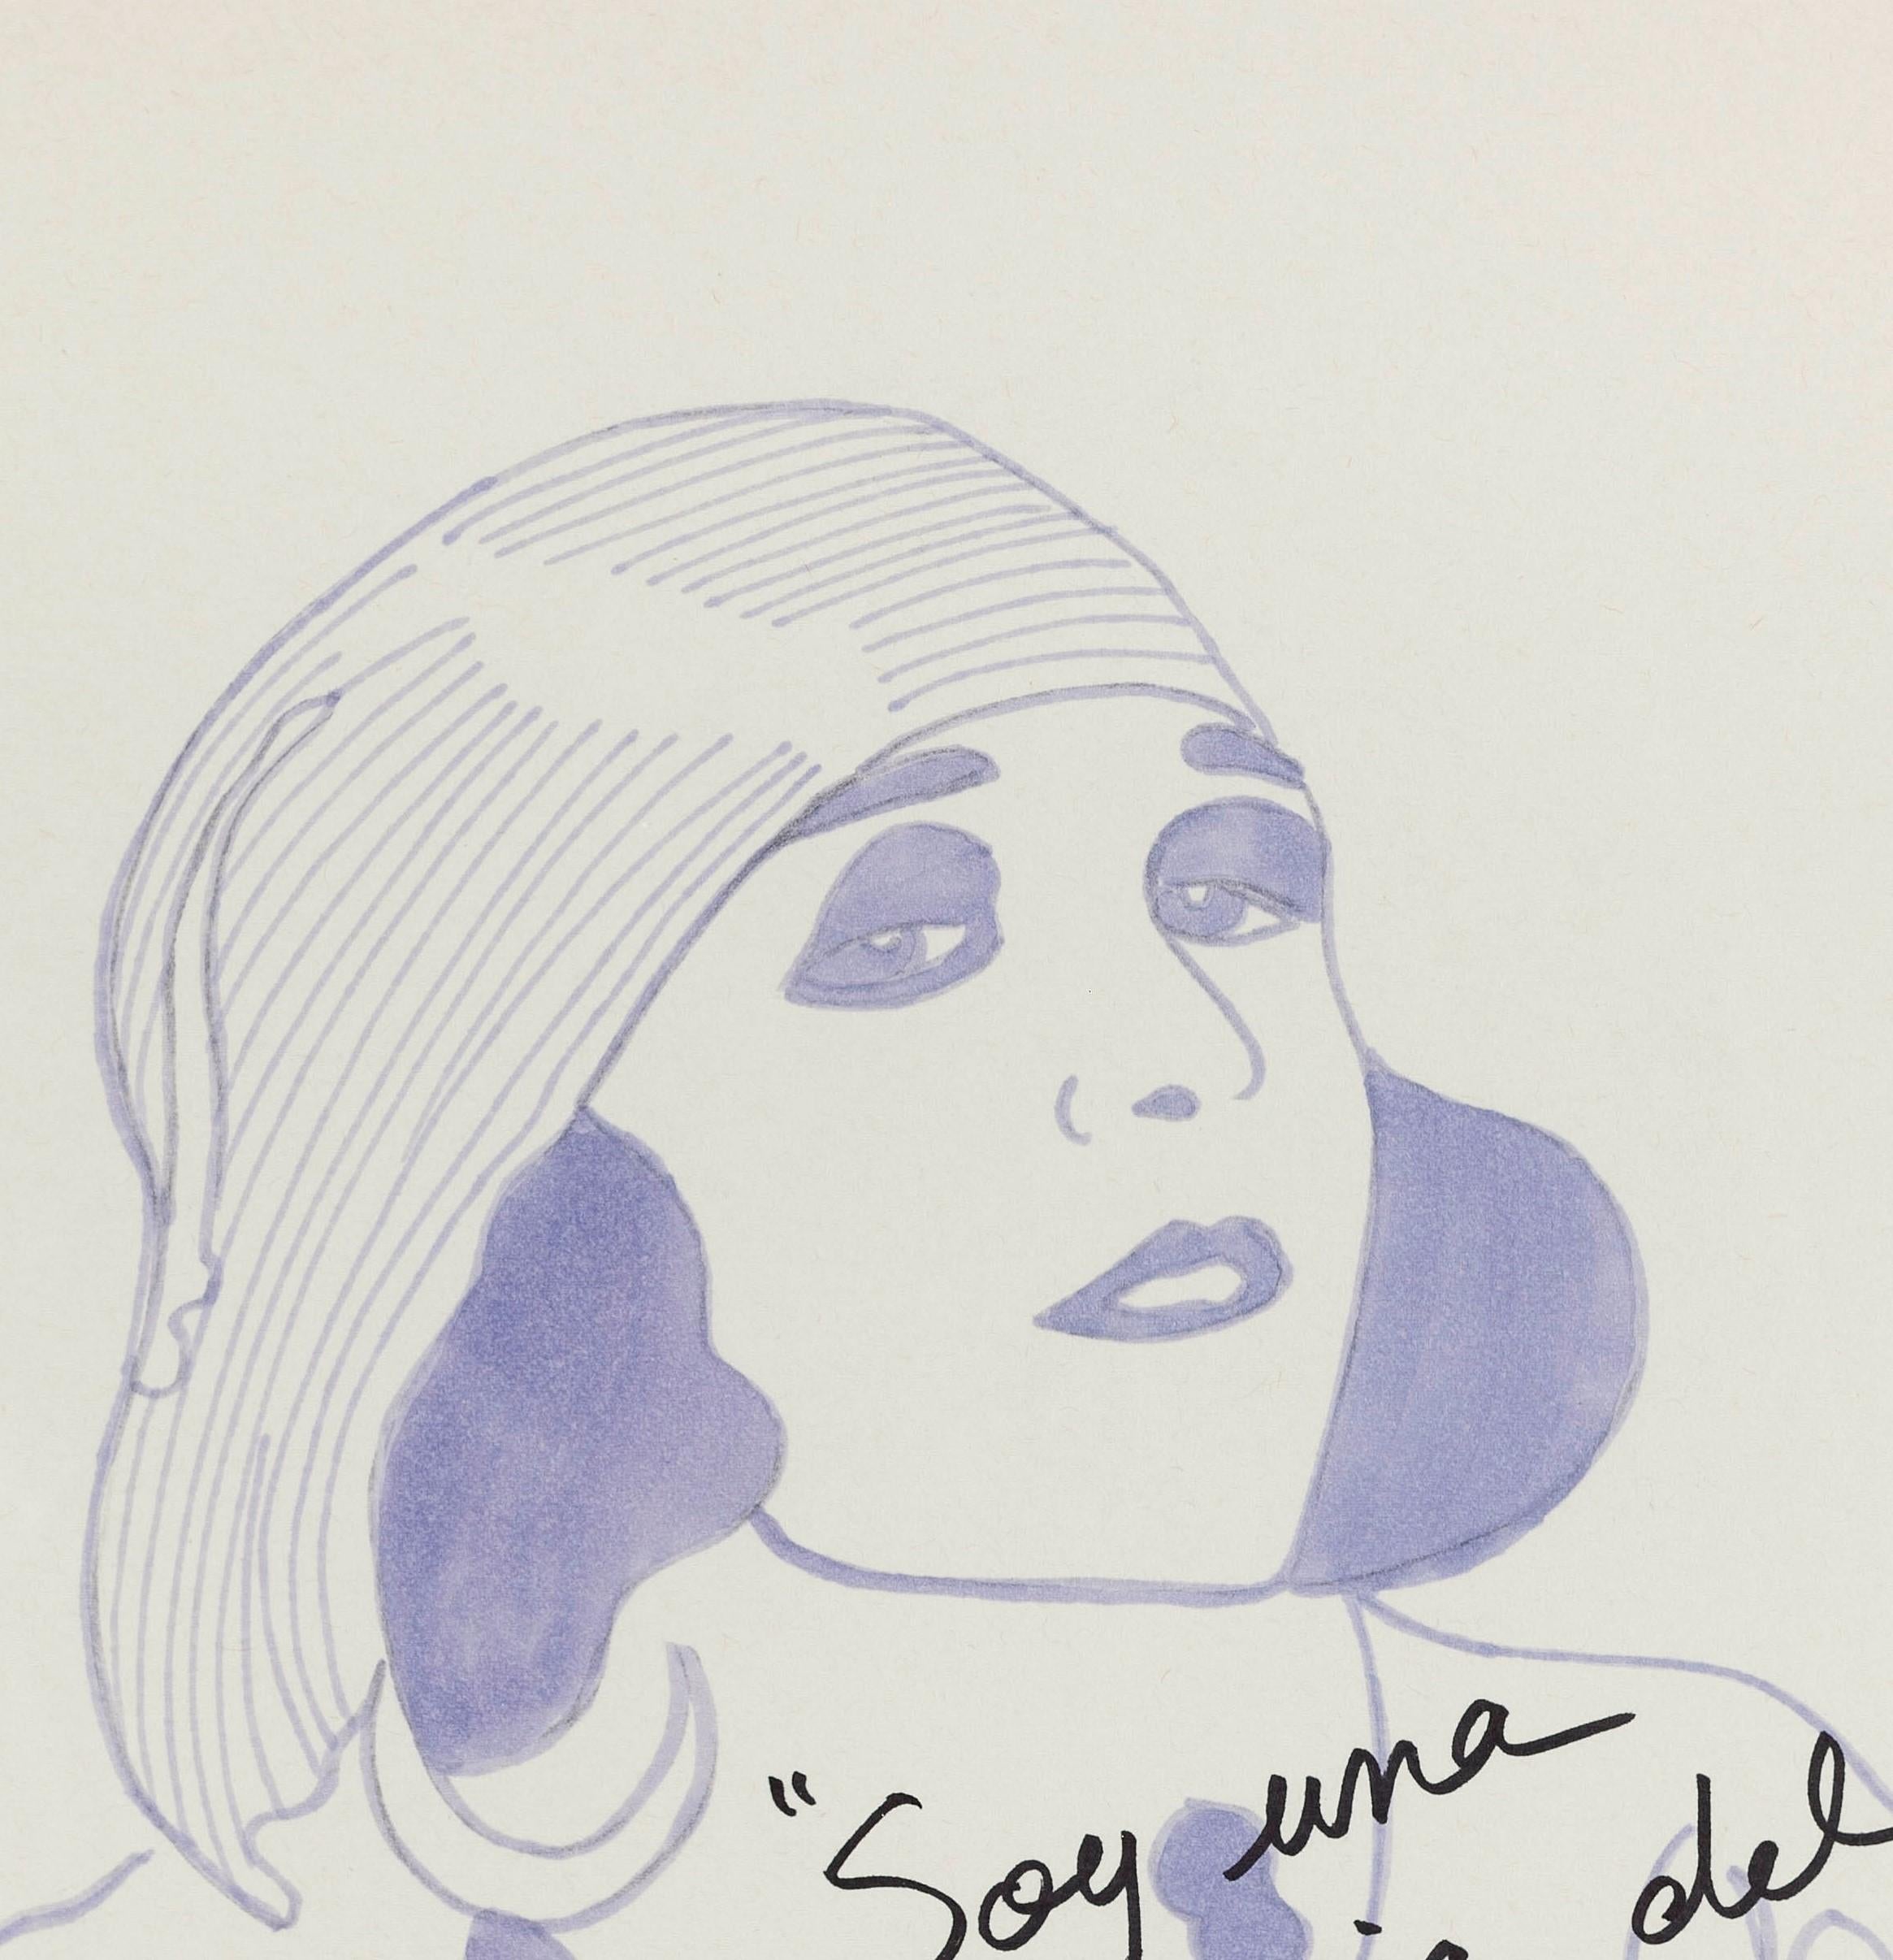 Pola Negri III. Dessins de la série Dis-enchanted. - Contemporain Art par Paloma Castello